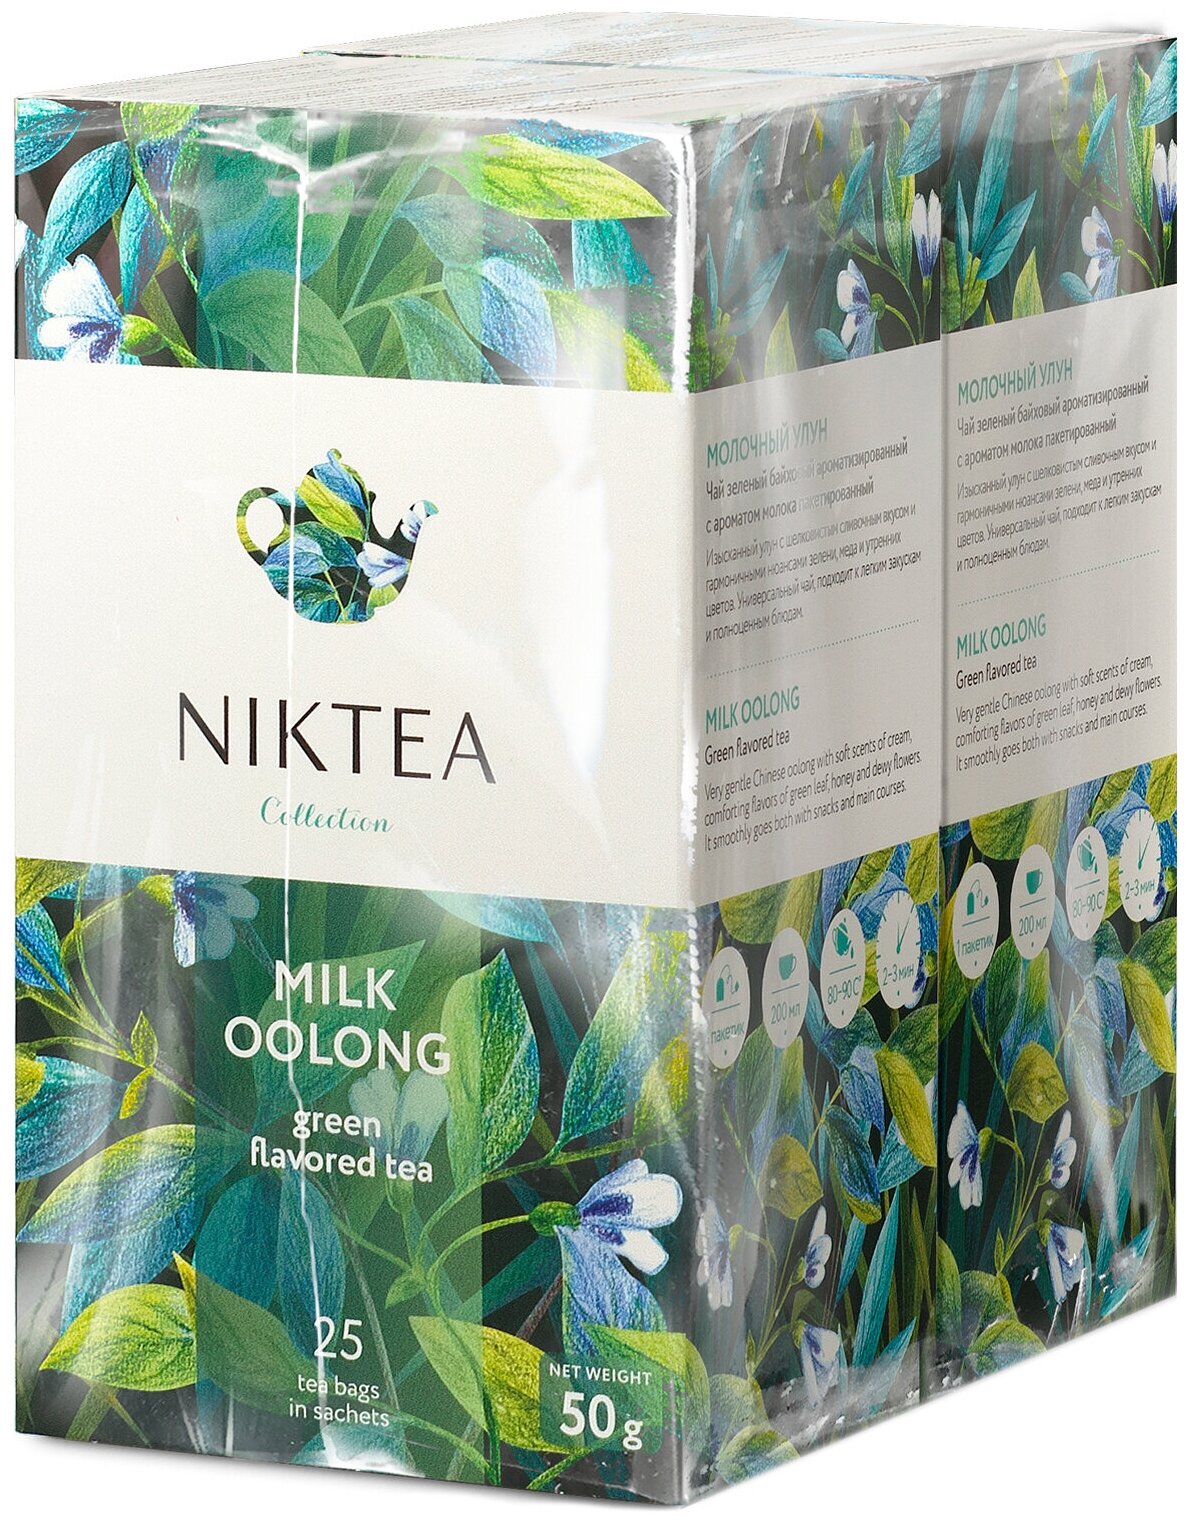 Чай Niktea Milk Oolong/ Молочный Улун, чай зеленый ароматизированный с ароматом молока пакетированный, 25 п х 2 г х 2 упаковки